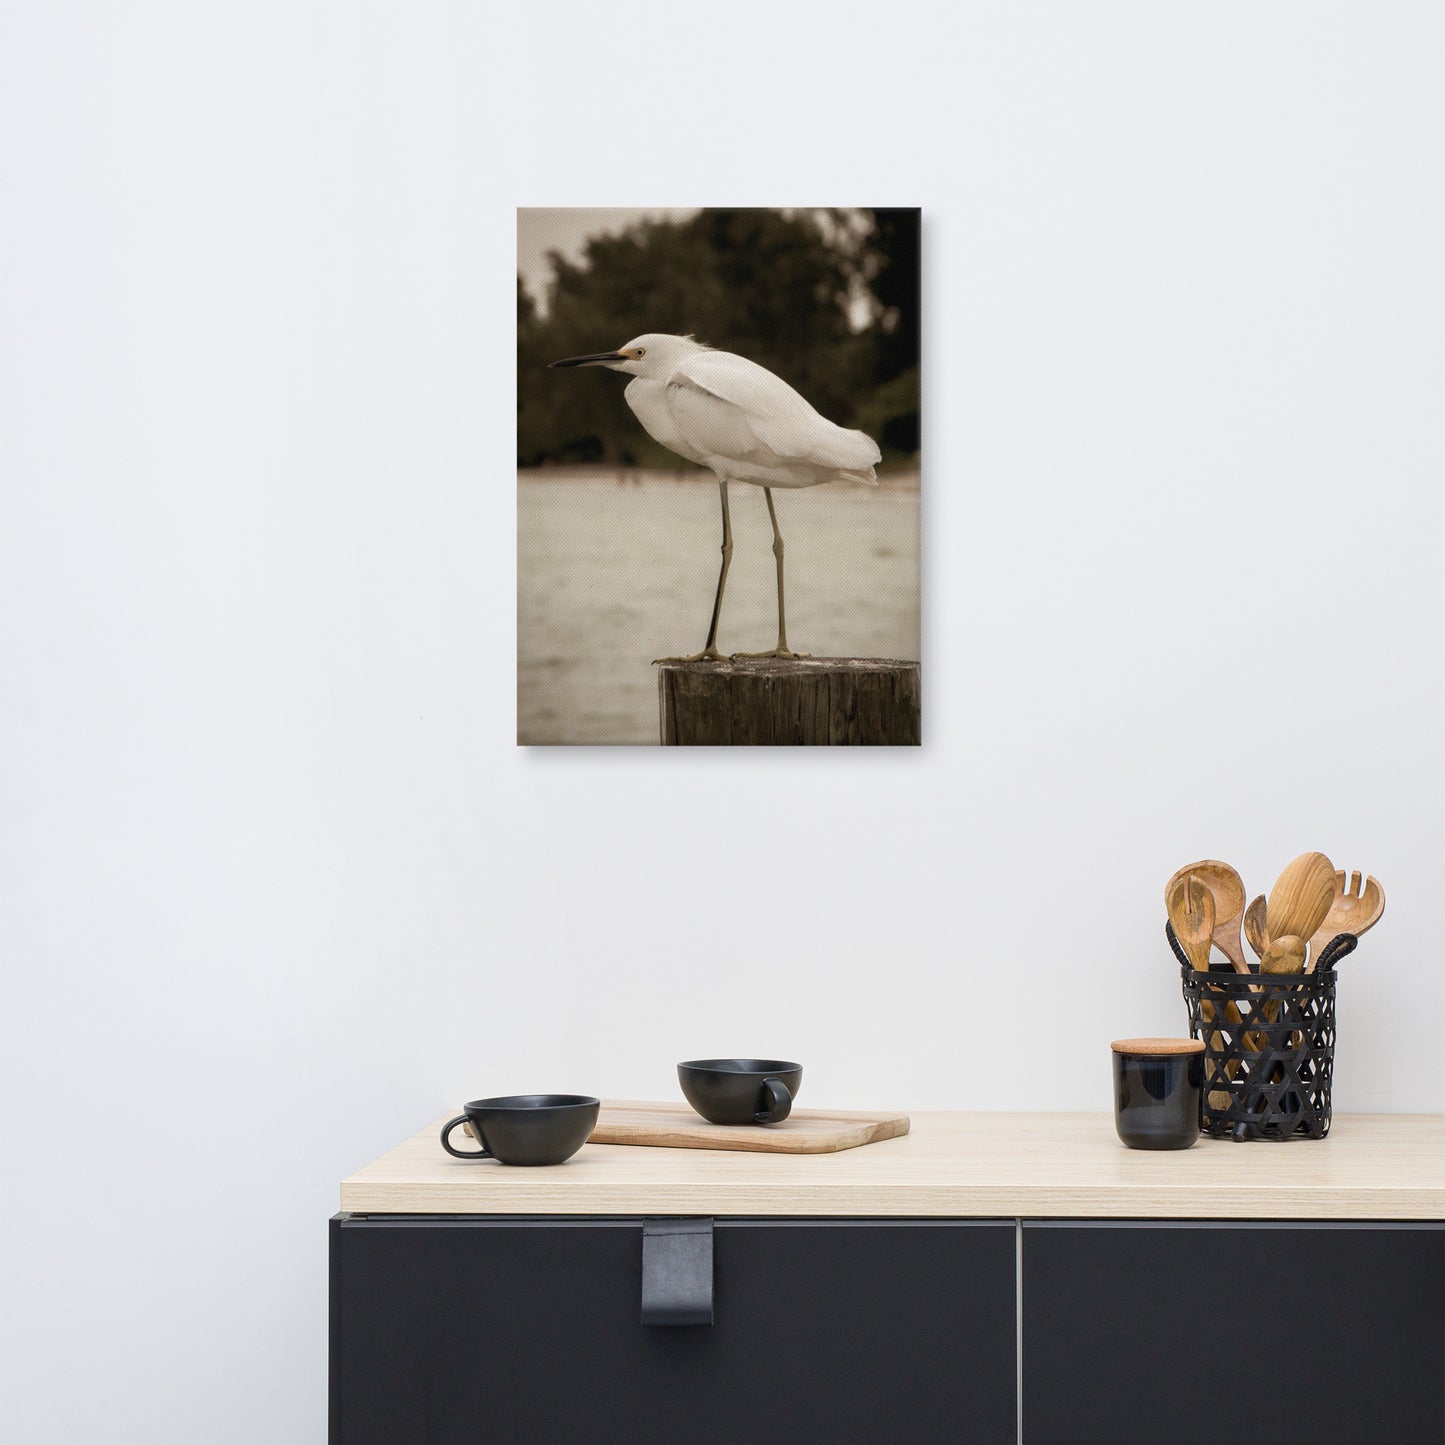 Art Over Dining Table: Sepia Coastal - Bird - Snowy Egret on Pillar / Animal / Wildlife Nature Canvas Photographic Wall Art Print - Artwork